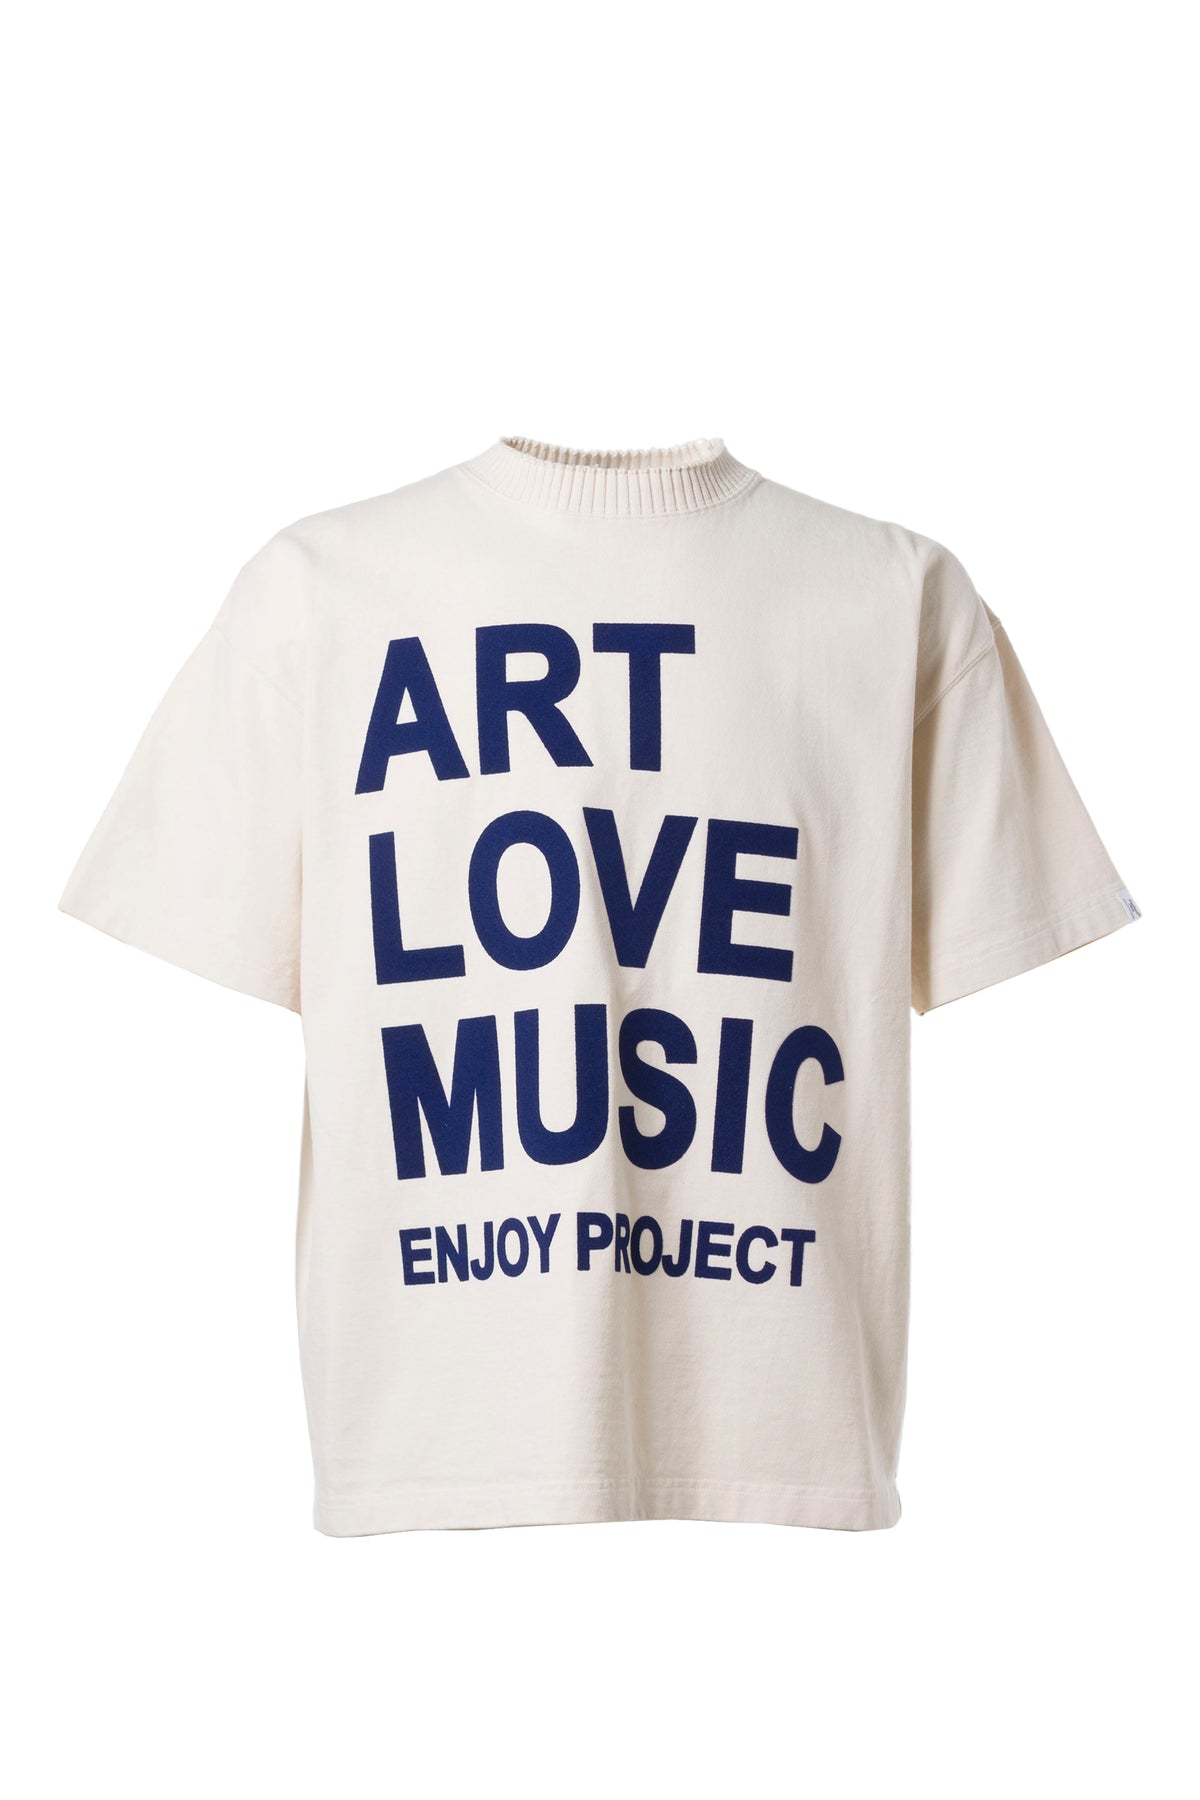 Perfect ribs BASIC SHORT SLEEVE T-SHIRTS "ART LOVE MUSIC" / OAT